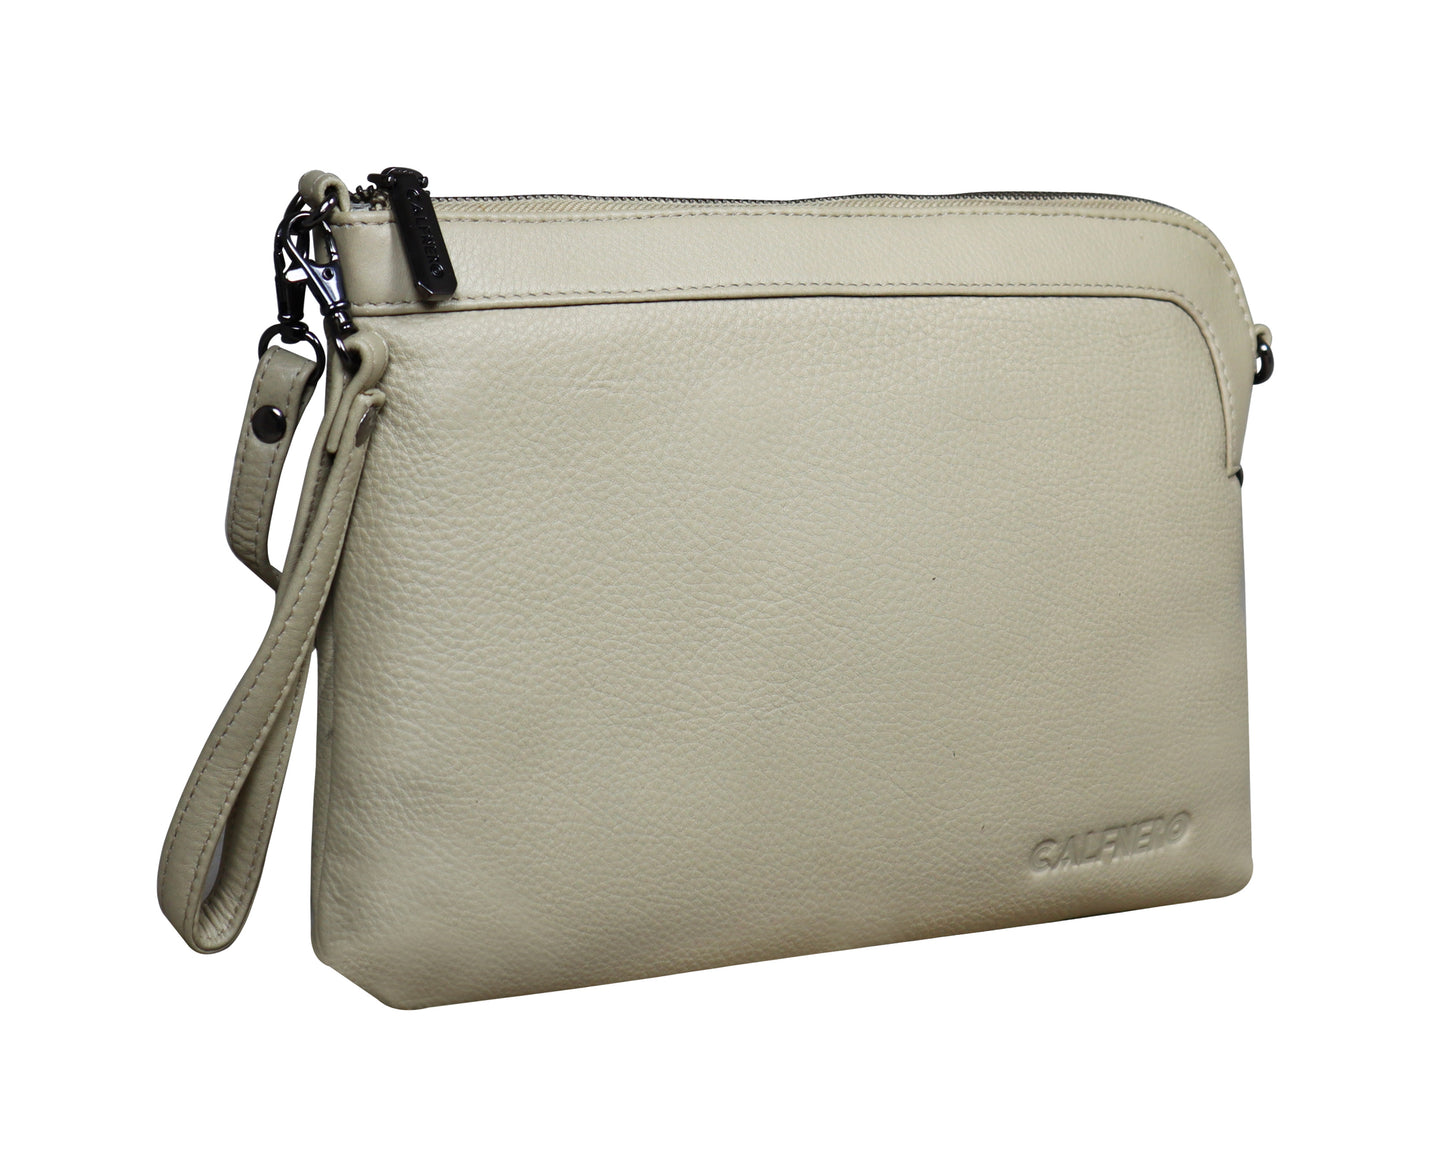 Calfnero Genuine Leather Women's Sling Bag (712660-Beige)